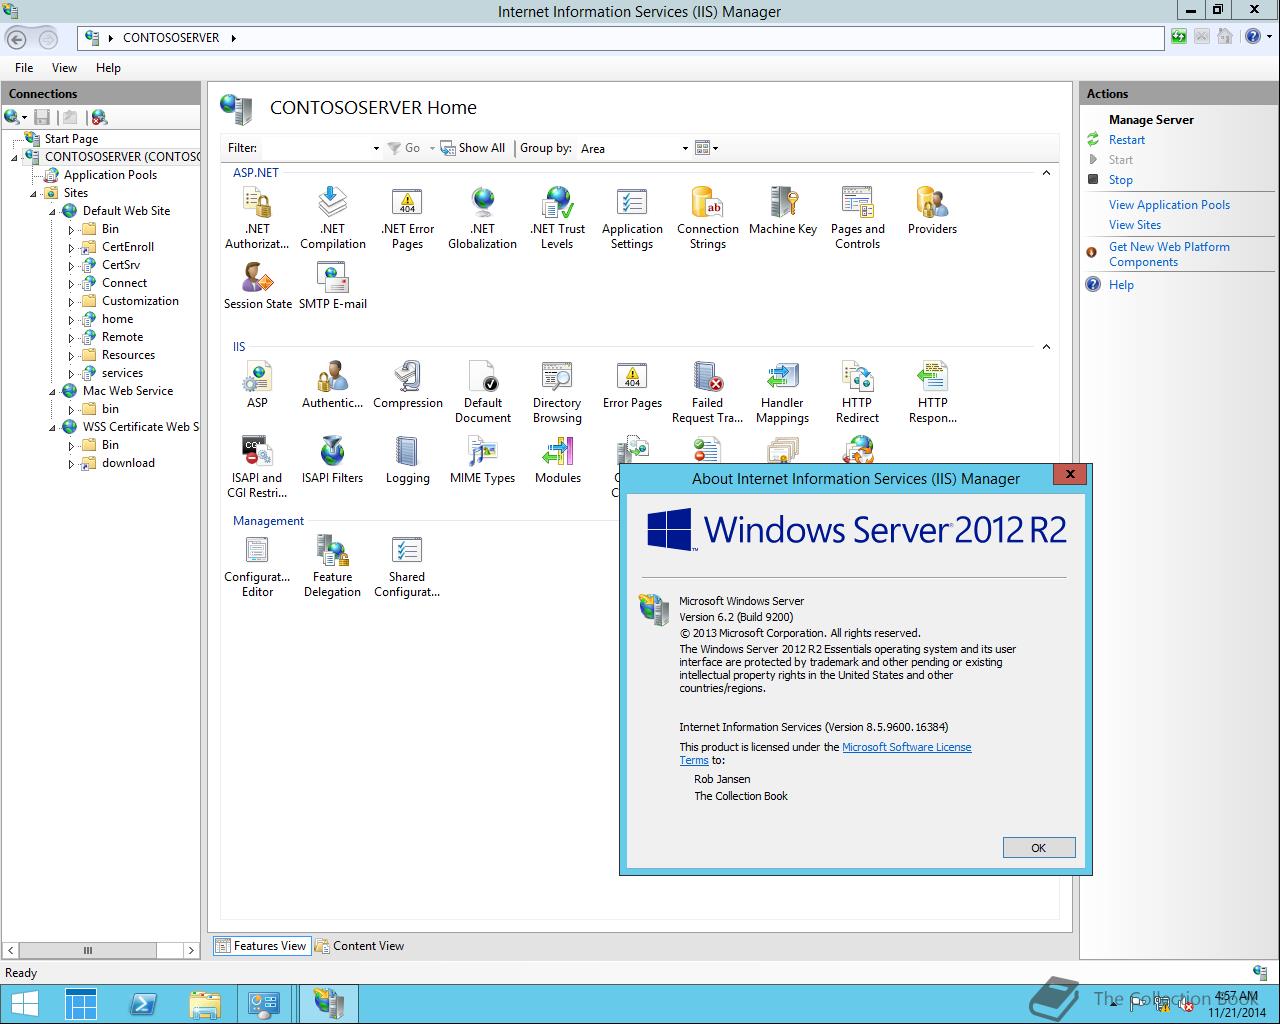 Microsoft Windows Server 2012 R2 Essentials 63960017415 The Collection Book 4882